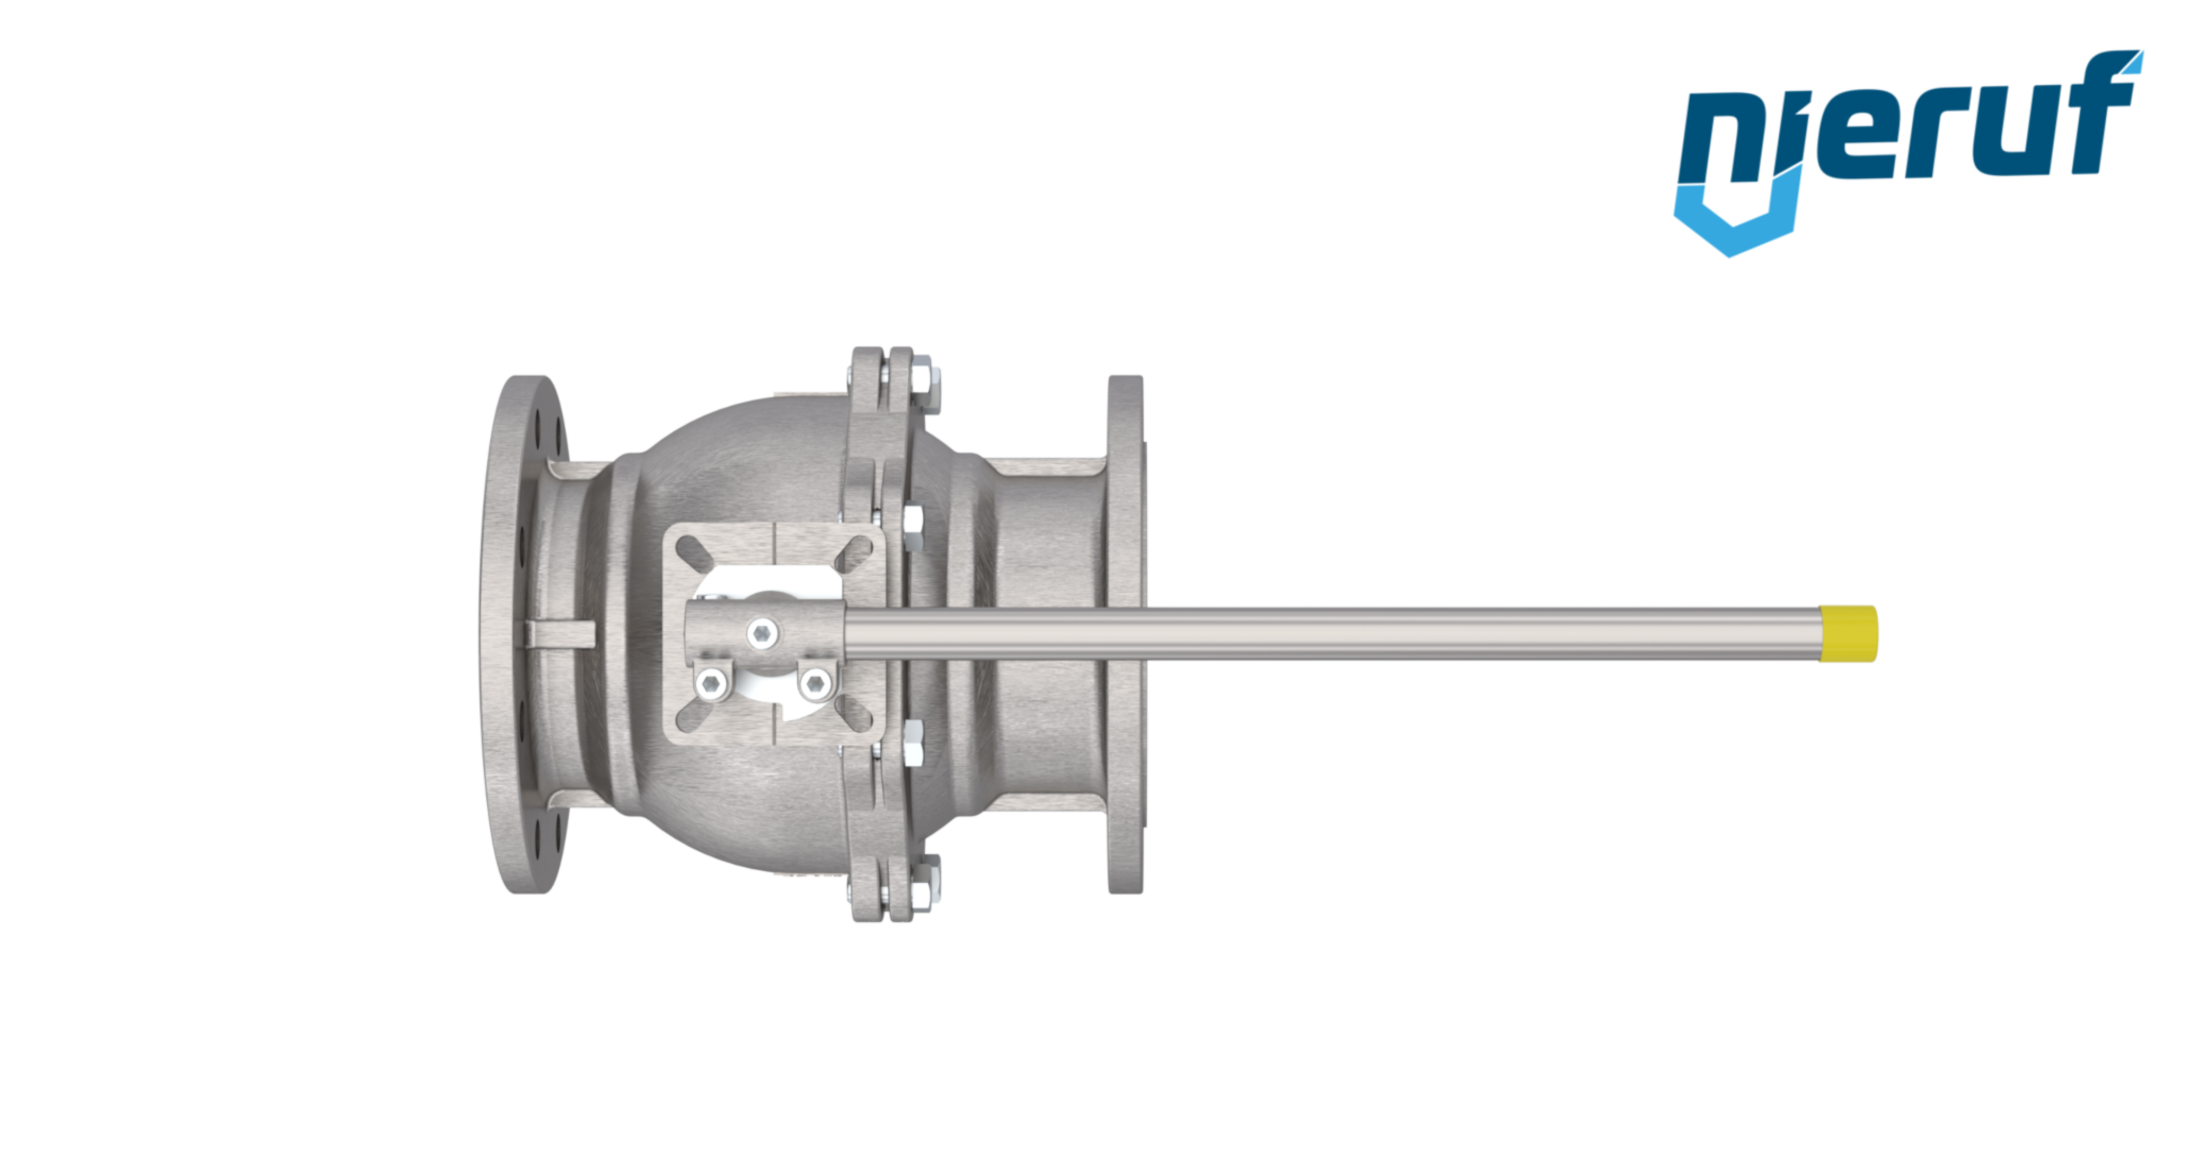 Steam-flange ball valve DN150 FK05 stainless steel 1.4408